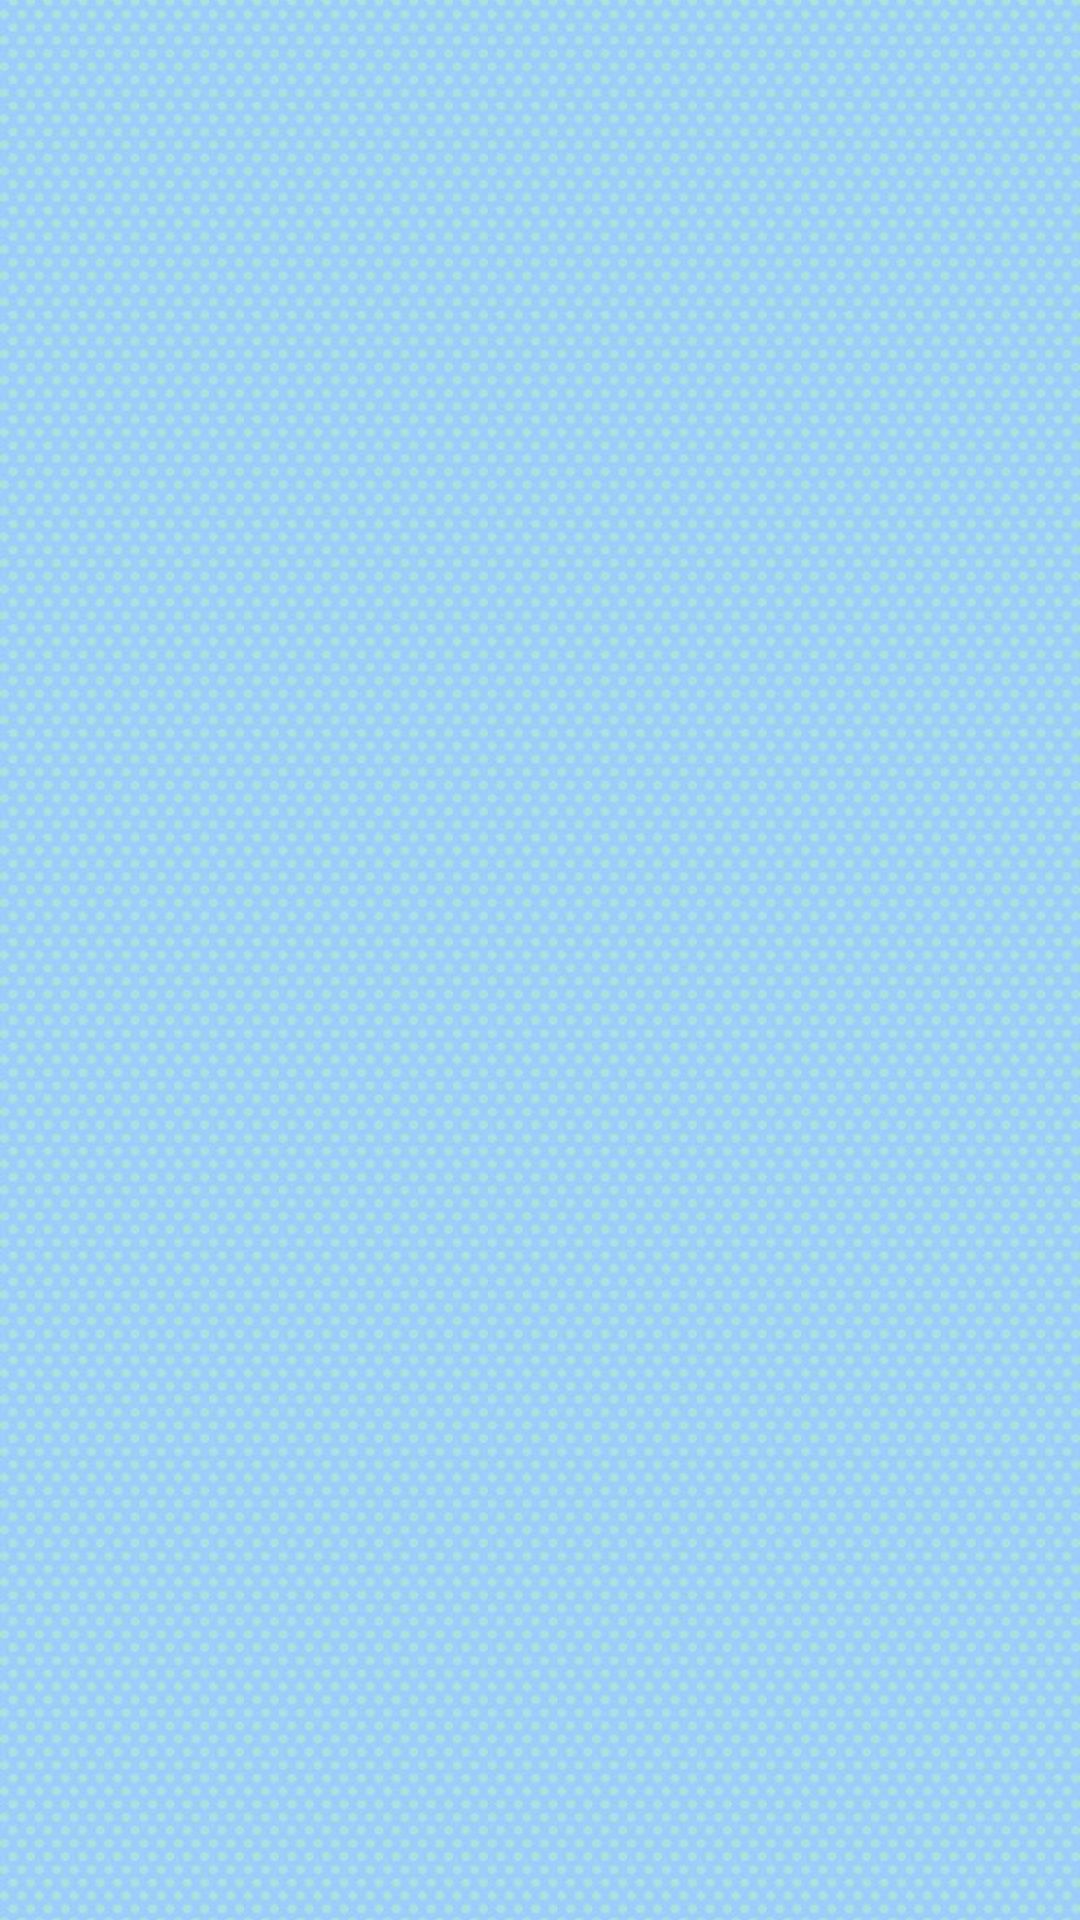 Top Best Baby Blue iPhone Wallpaper { 4k & HD }